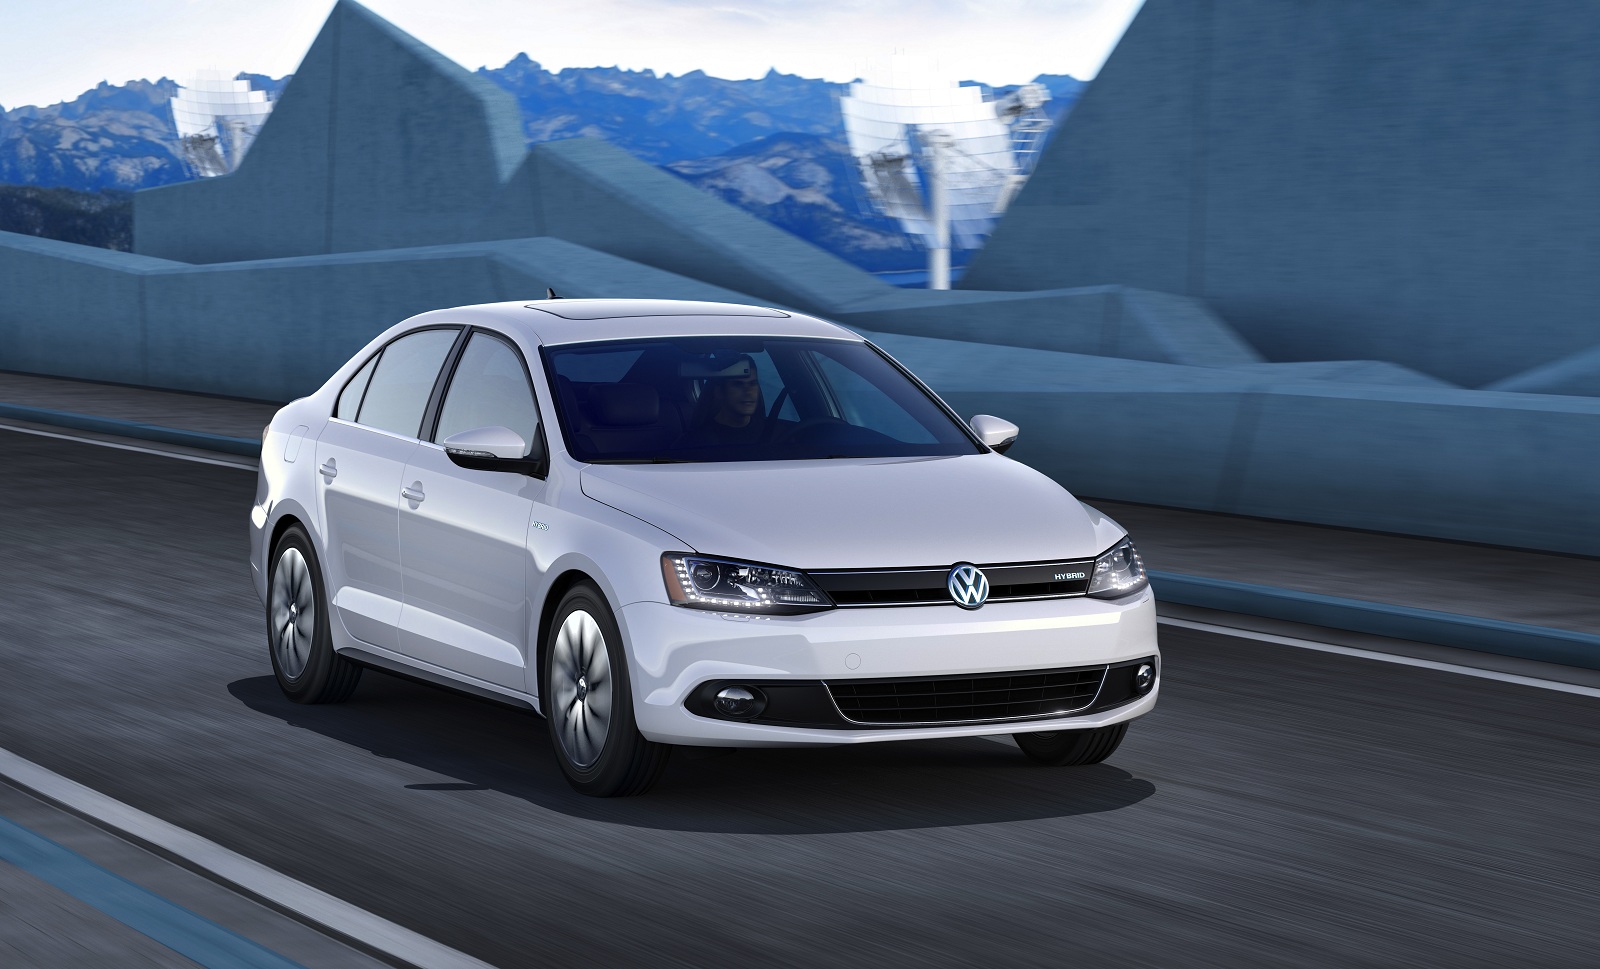 2013 Volkswagen Jetta Hybrid Or Jetta TDI: Which Would You Buy?